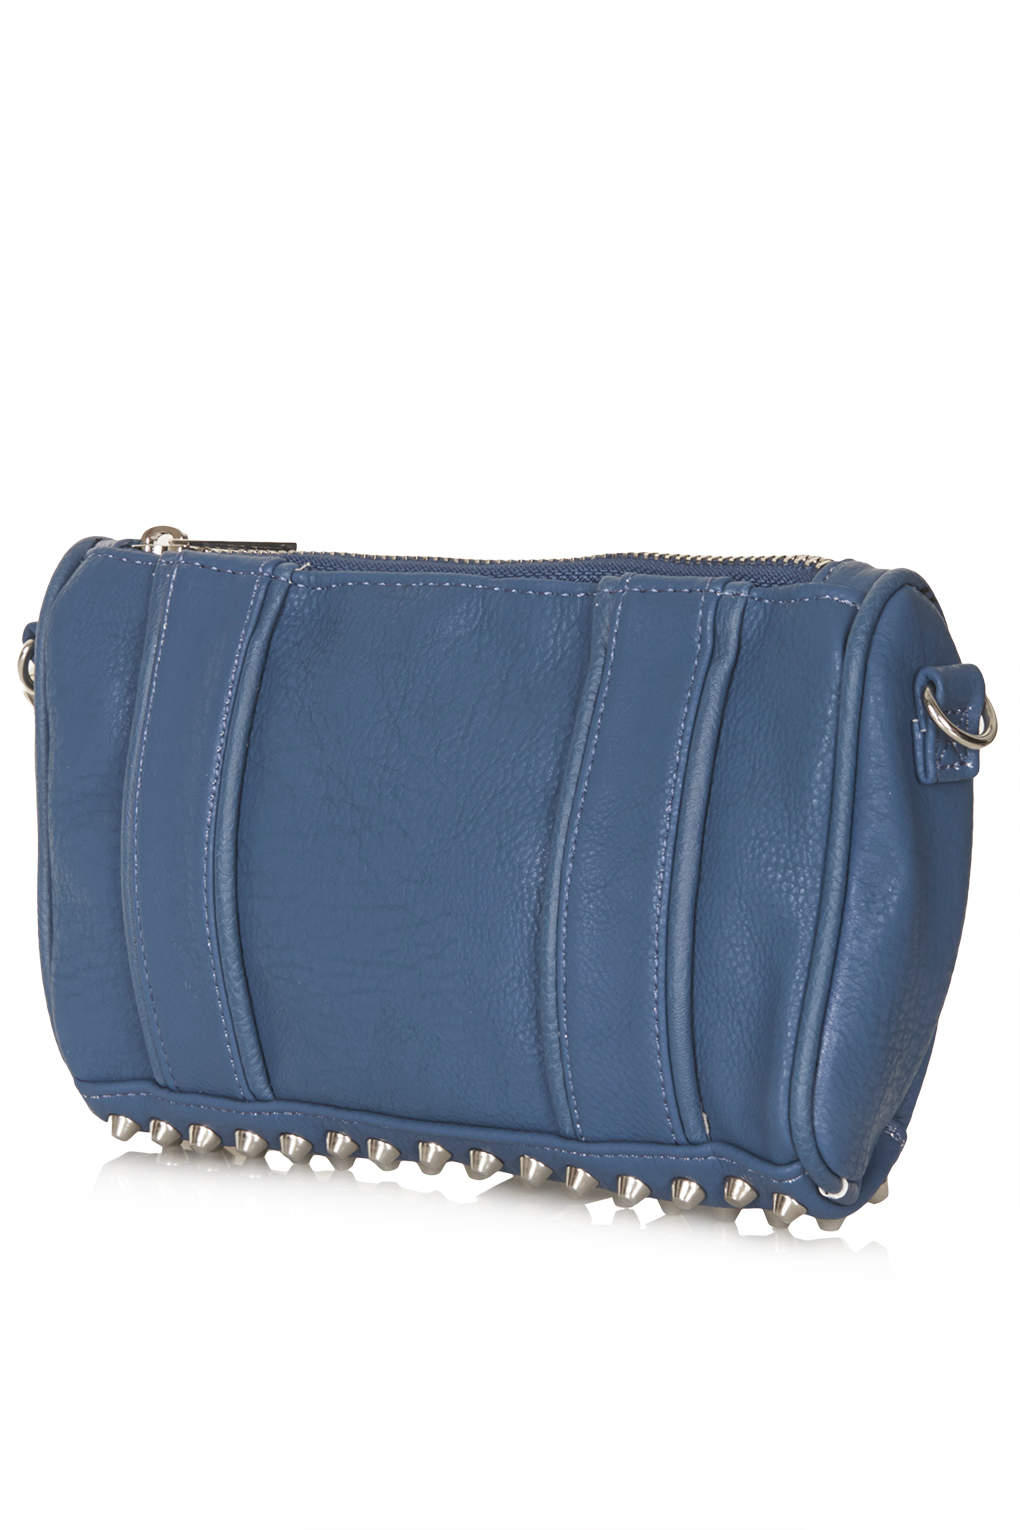 Topshop Studded Zip Top Crossbody Bag in Blue | Lyst